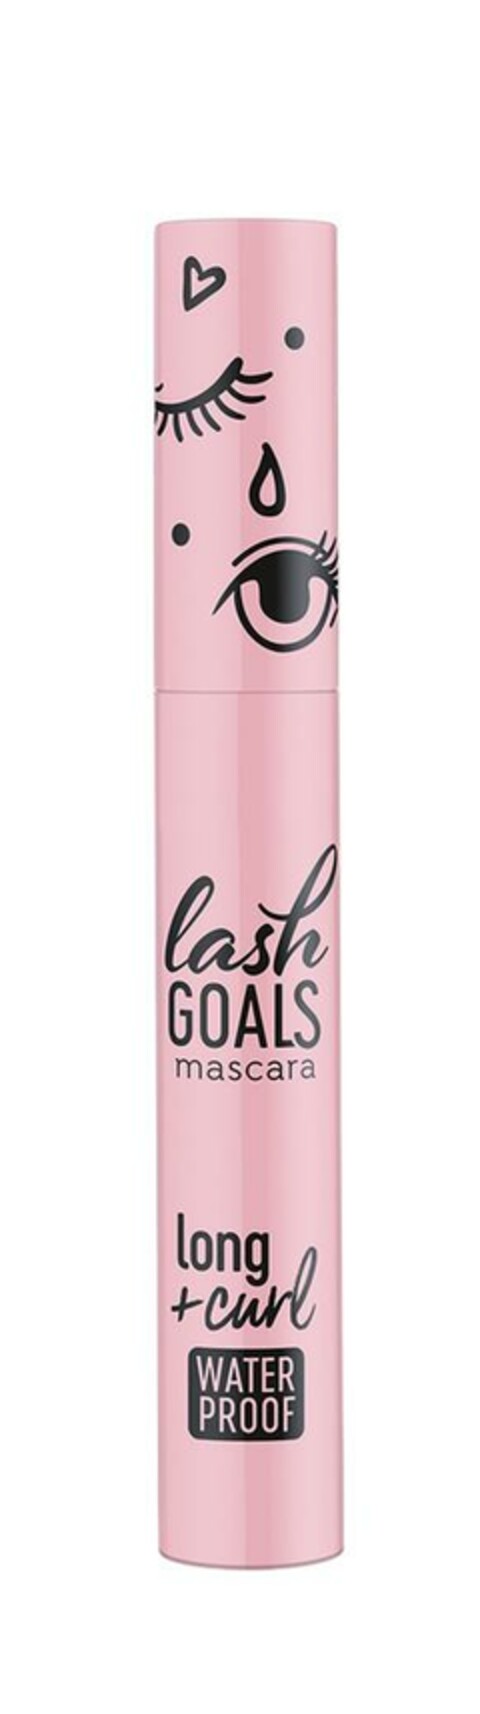 B lash GOALS mascara long + Curl WATER PROOF Logo (EUIPO, 05/16/2023)